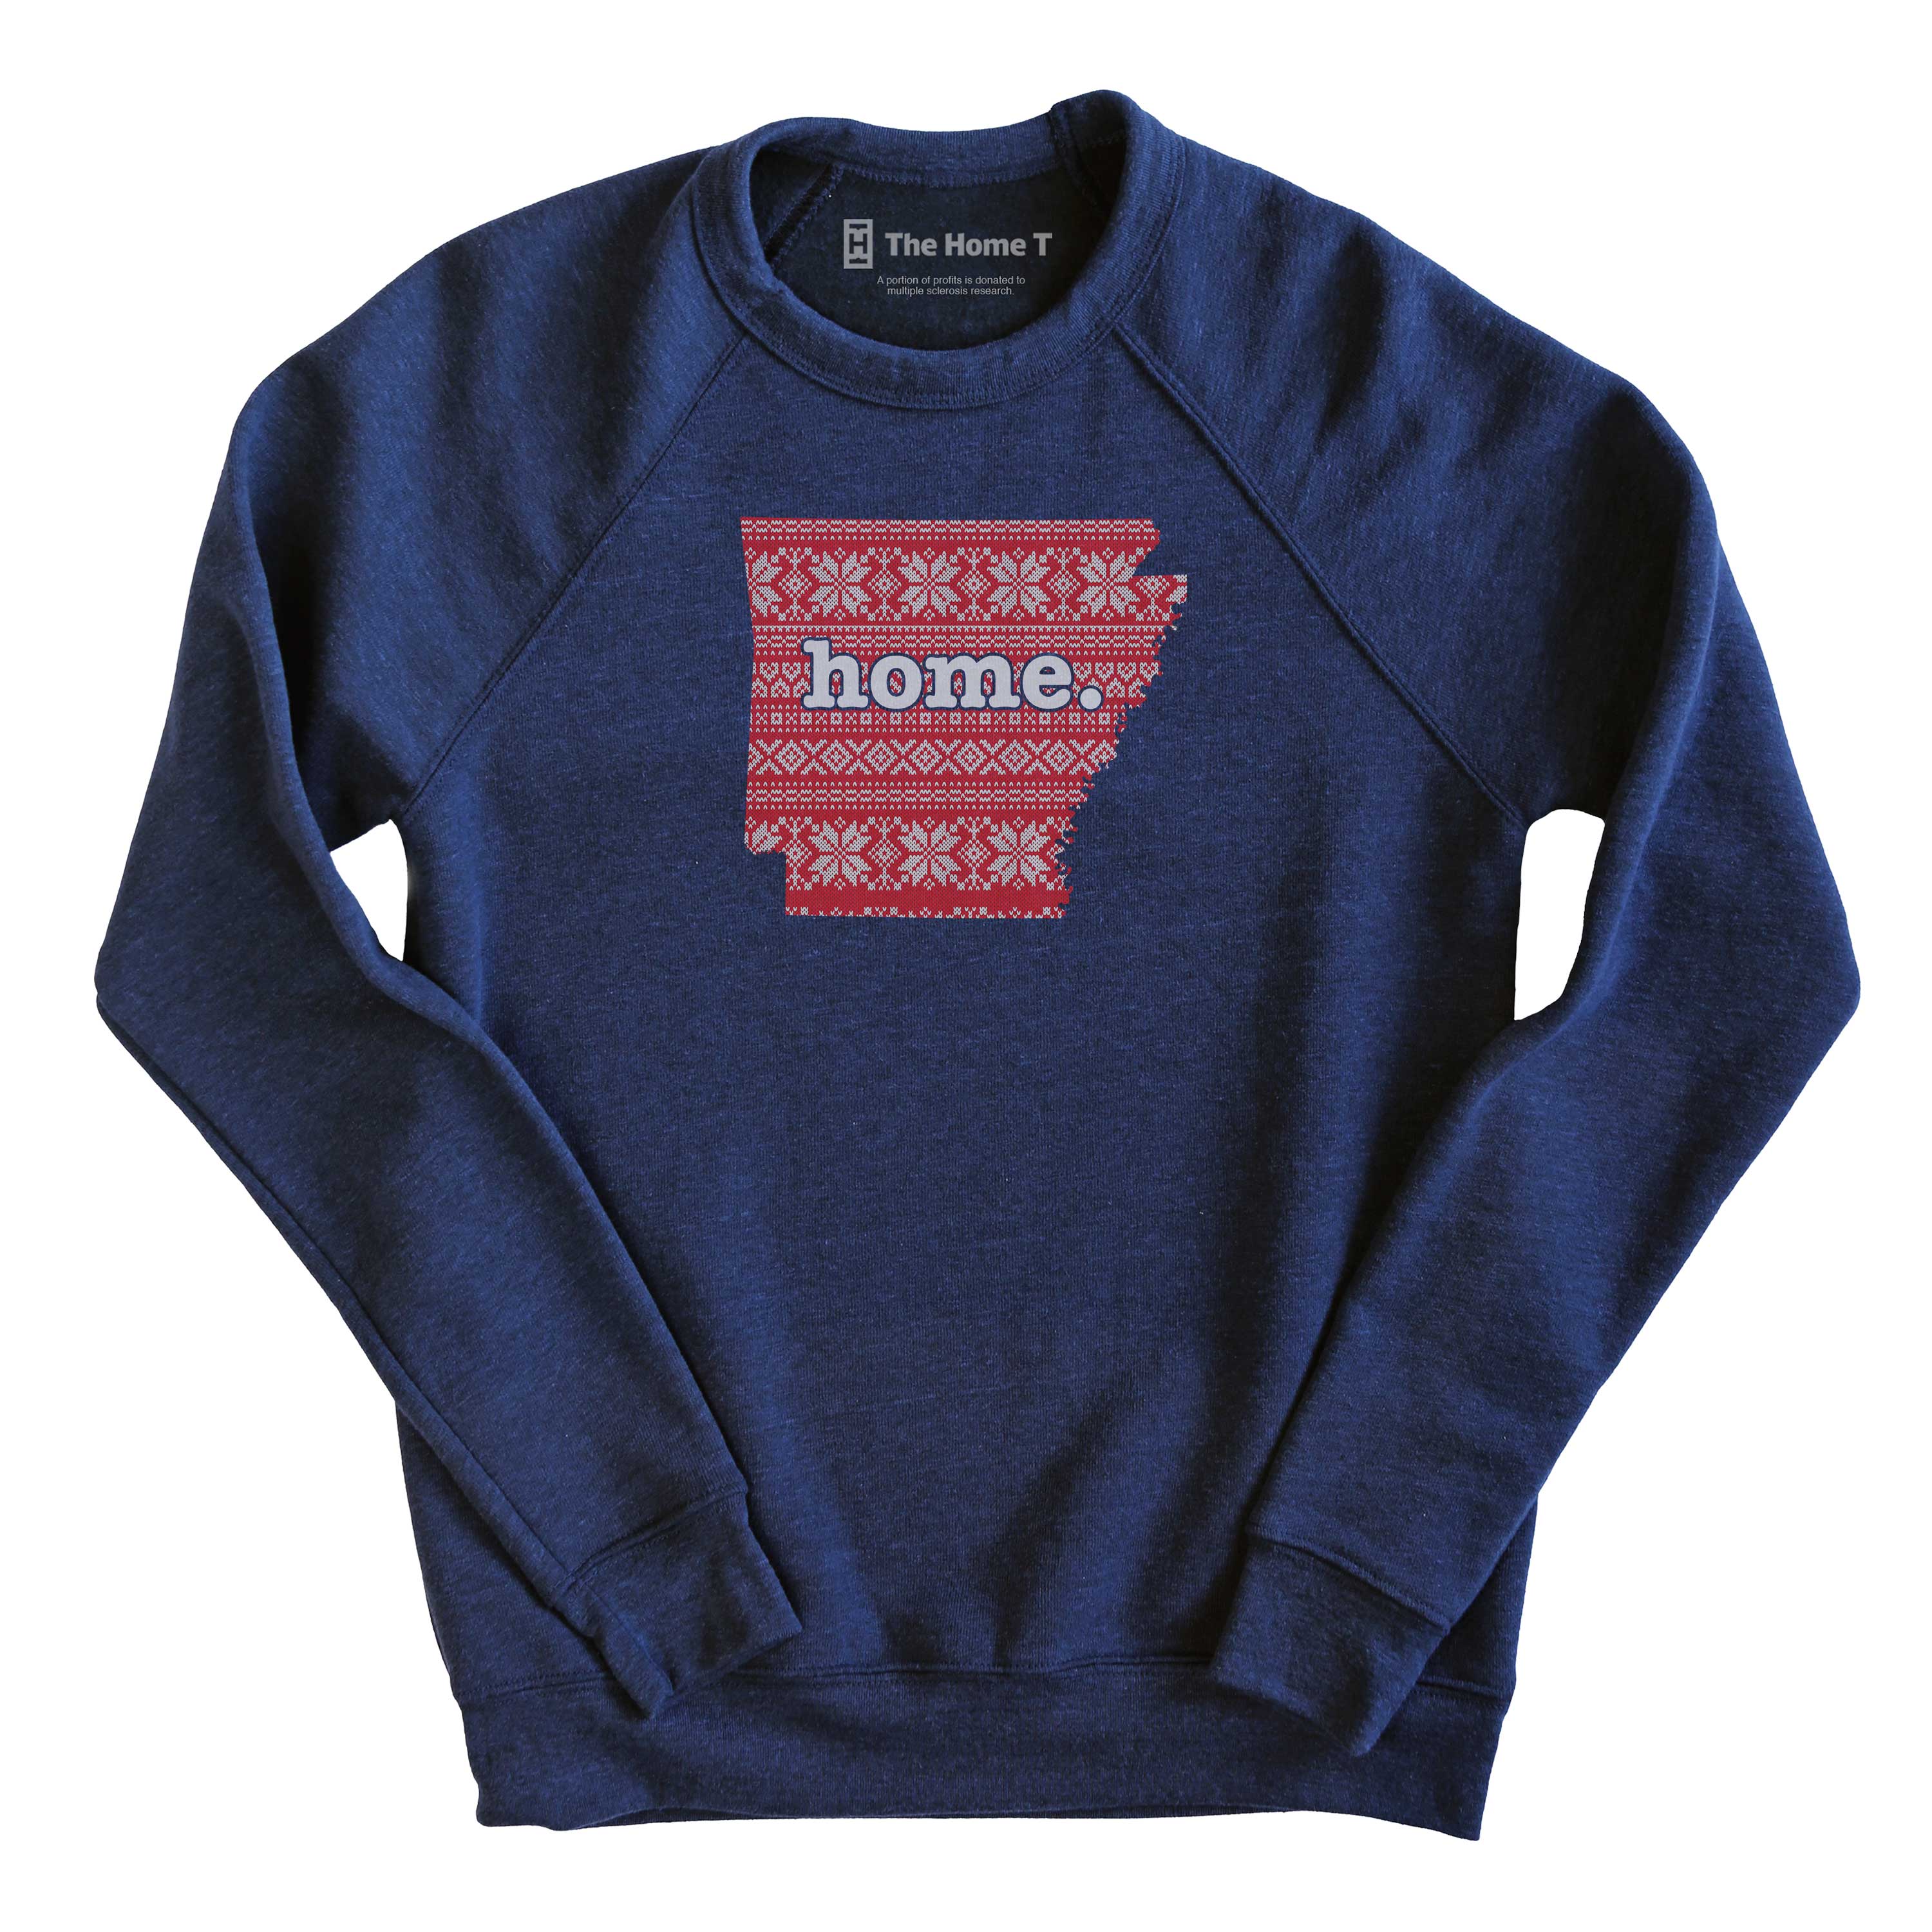 Arkansas Christmas Sweater Pattern Christmas Sweater The Home T XS Navy Sweatshirt